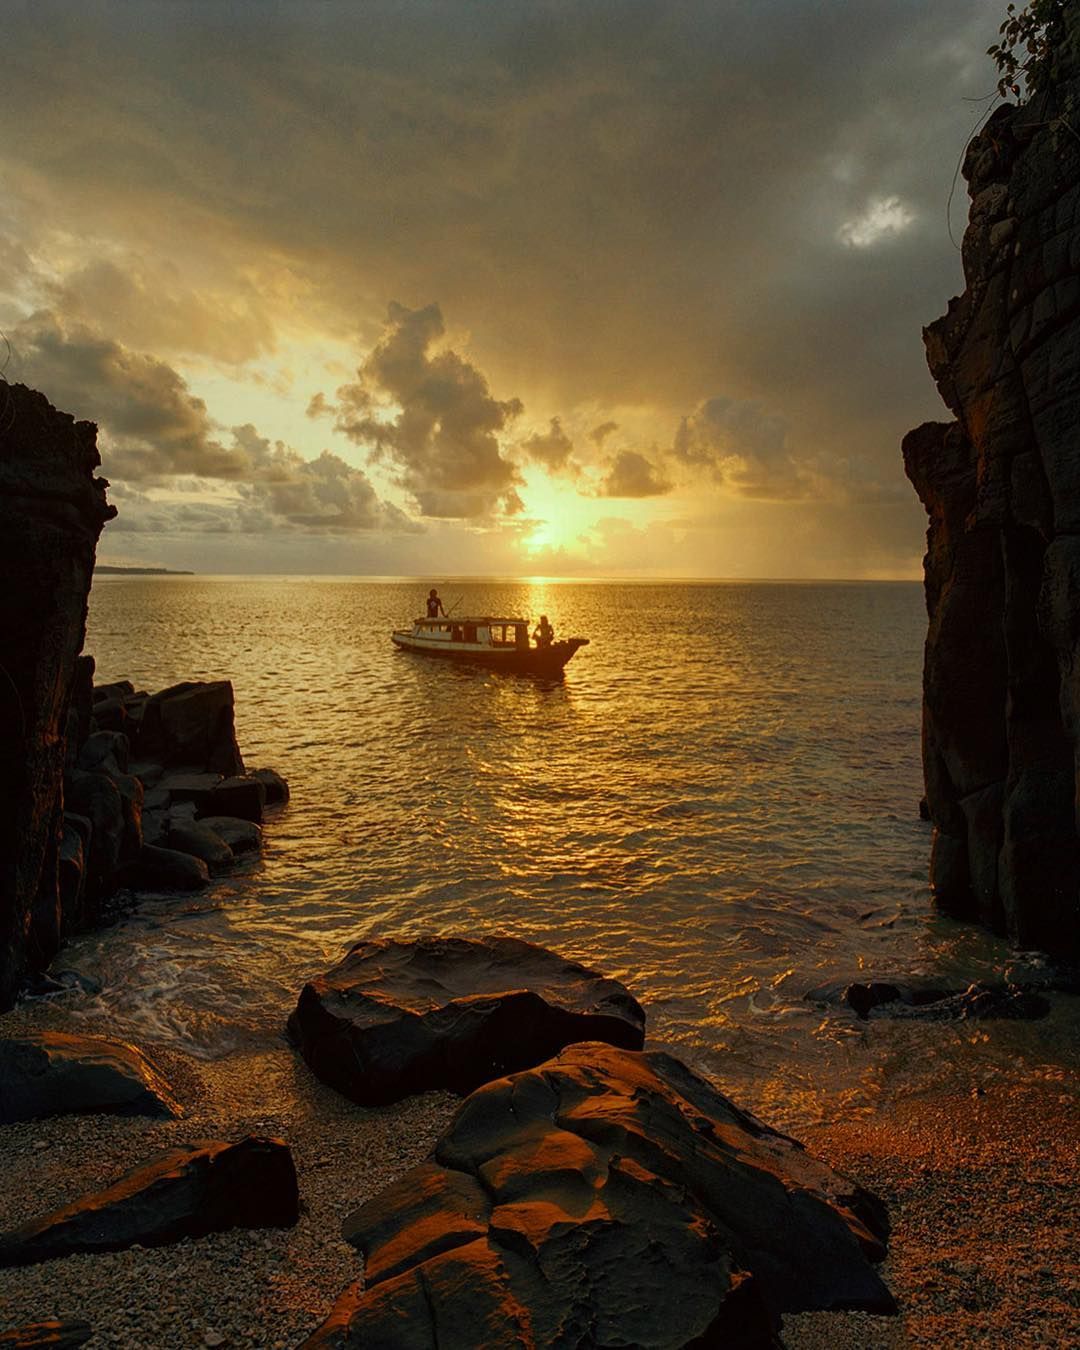 Frédéric Lagrange, Banda Neira, Maluku, Indonesia. Maluku, Beautiful Nature Scenes, Sunset